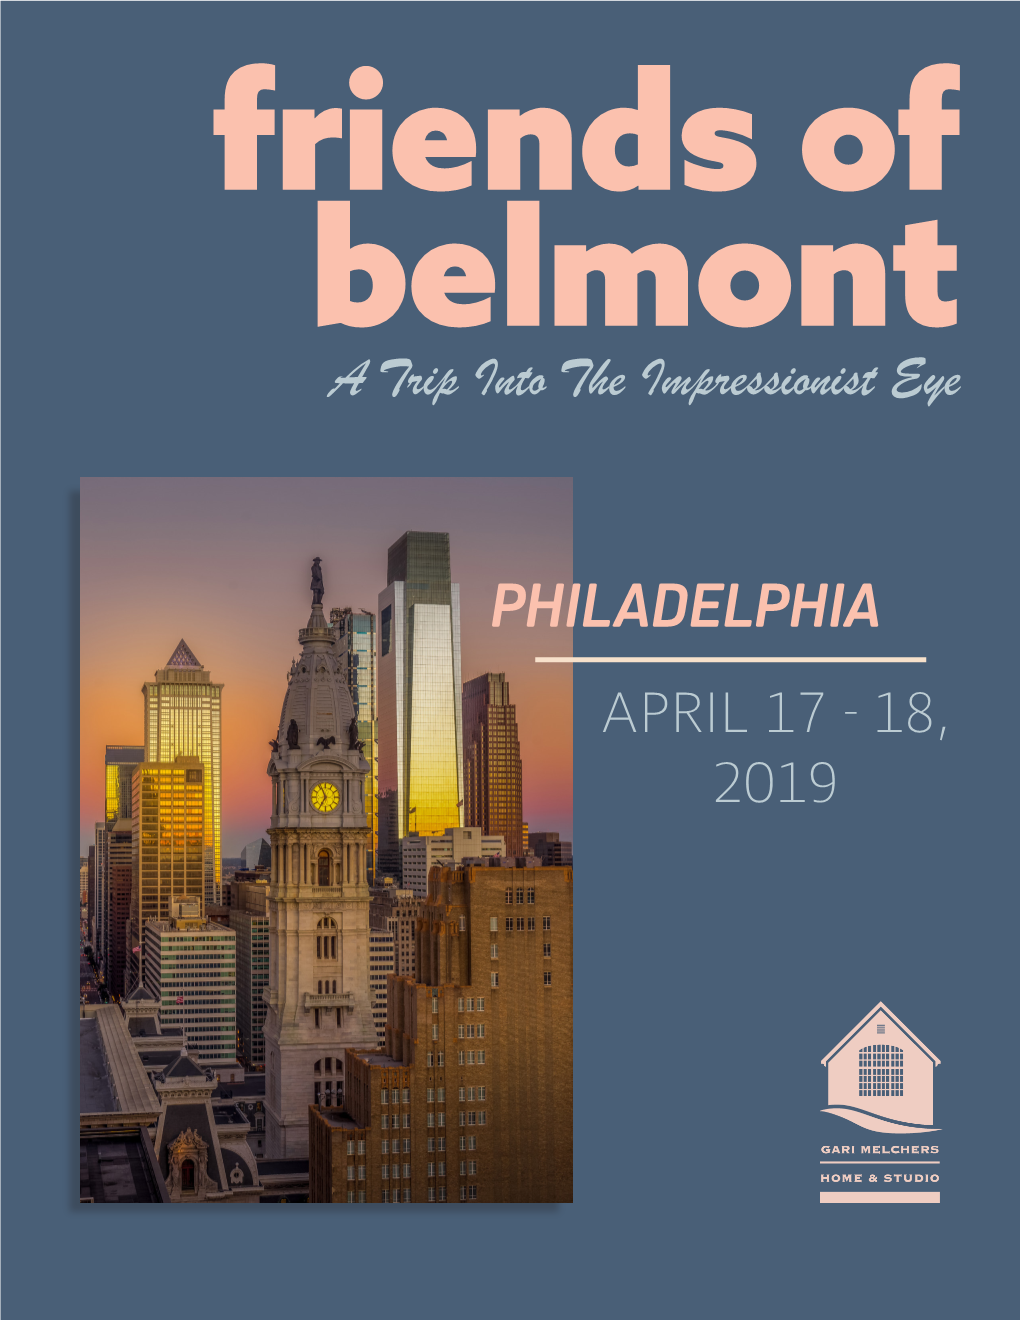 PHILADELPHIA APRIL 17 - 18, 2019 Philadelphia Museum of Art Day 1: April 17 Philadelphia Museum of Art